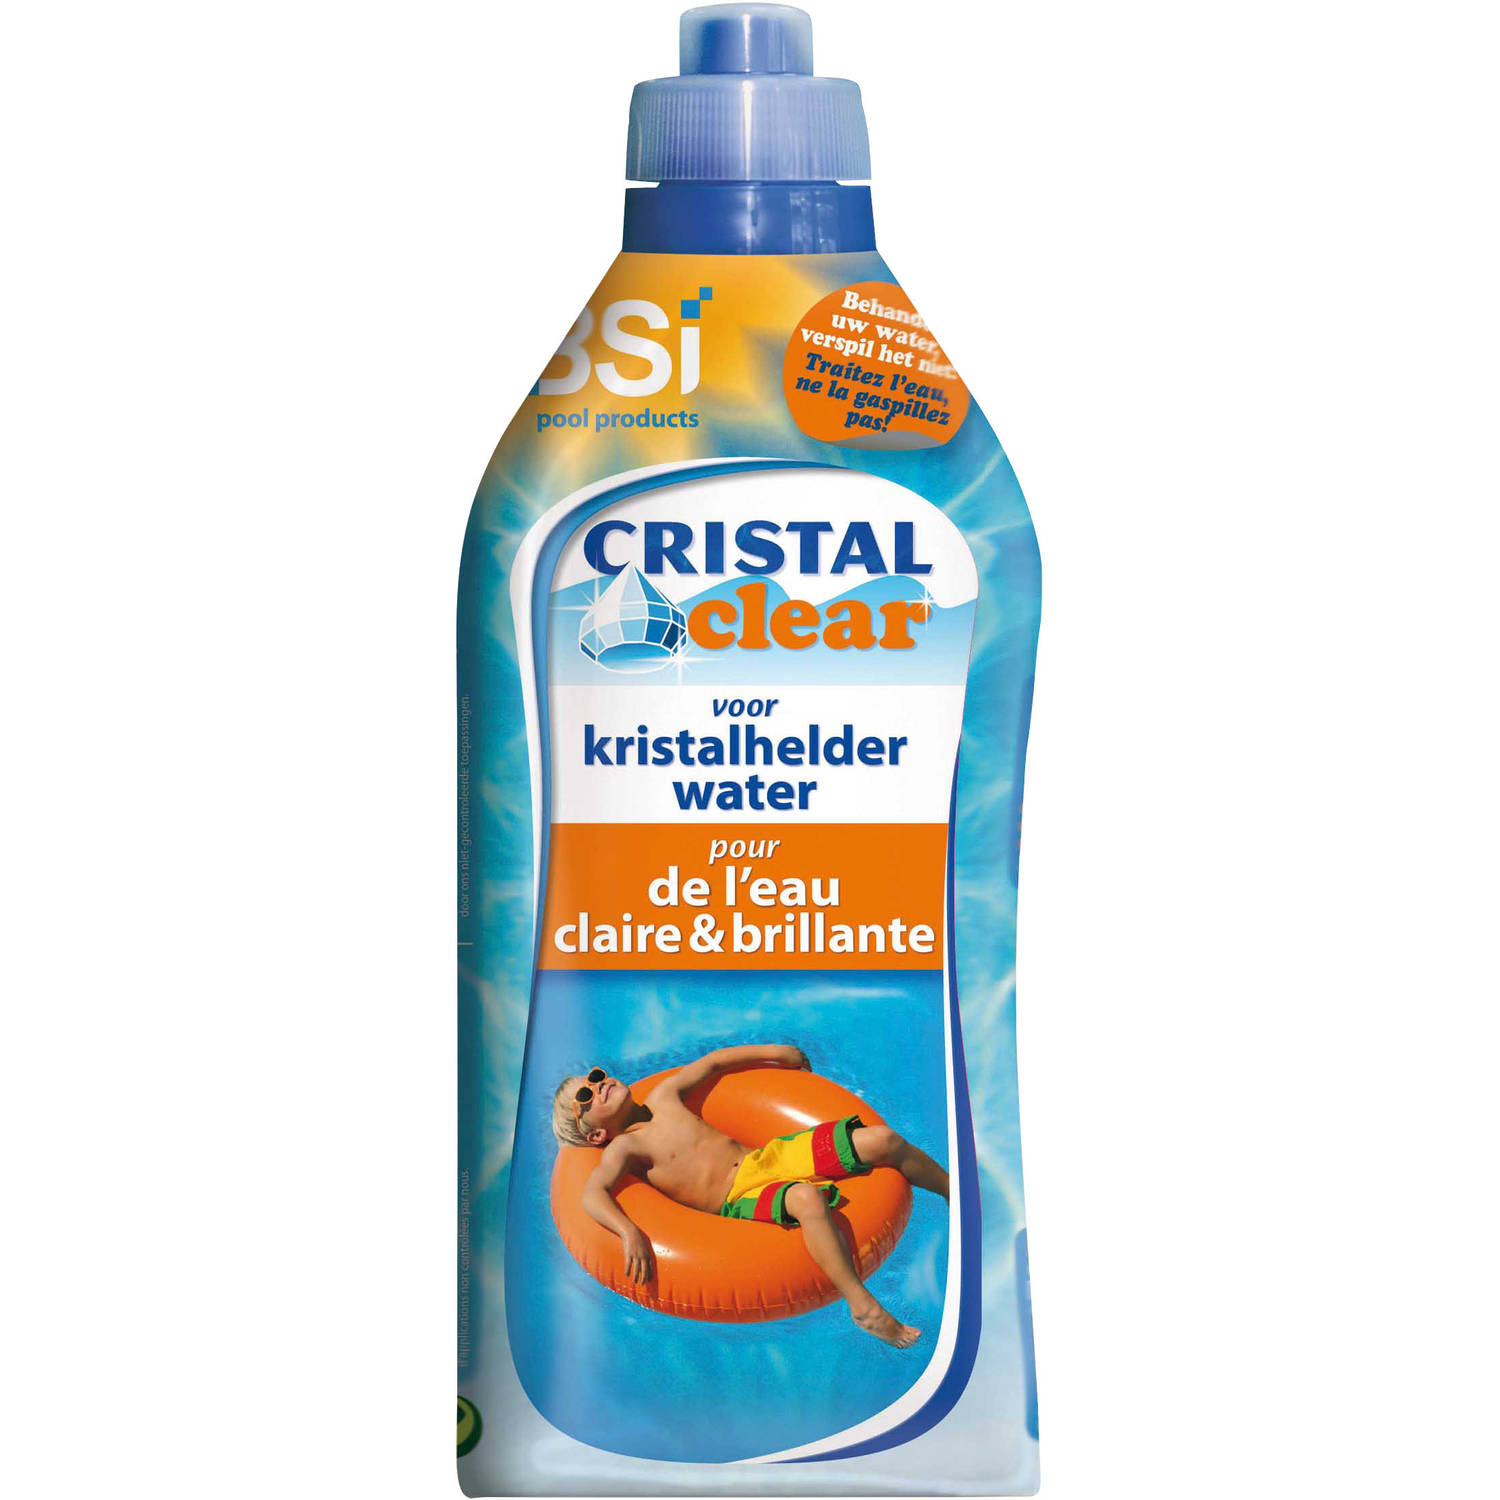 Cristal clear, 1 Liter